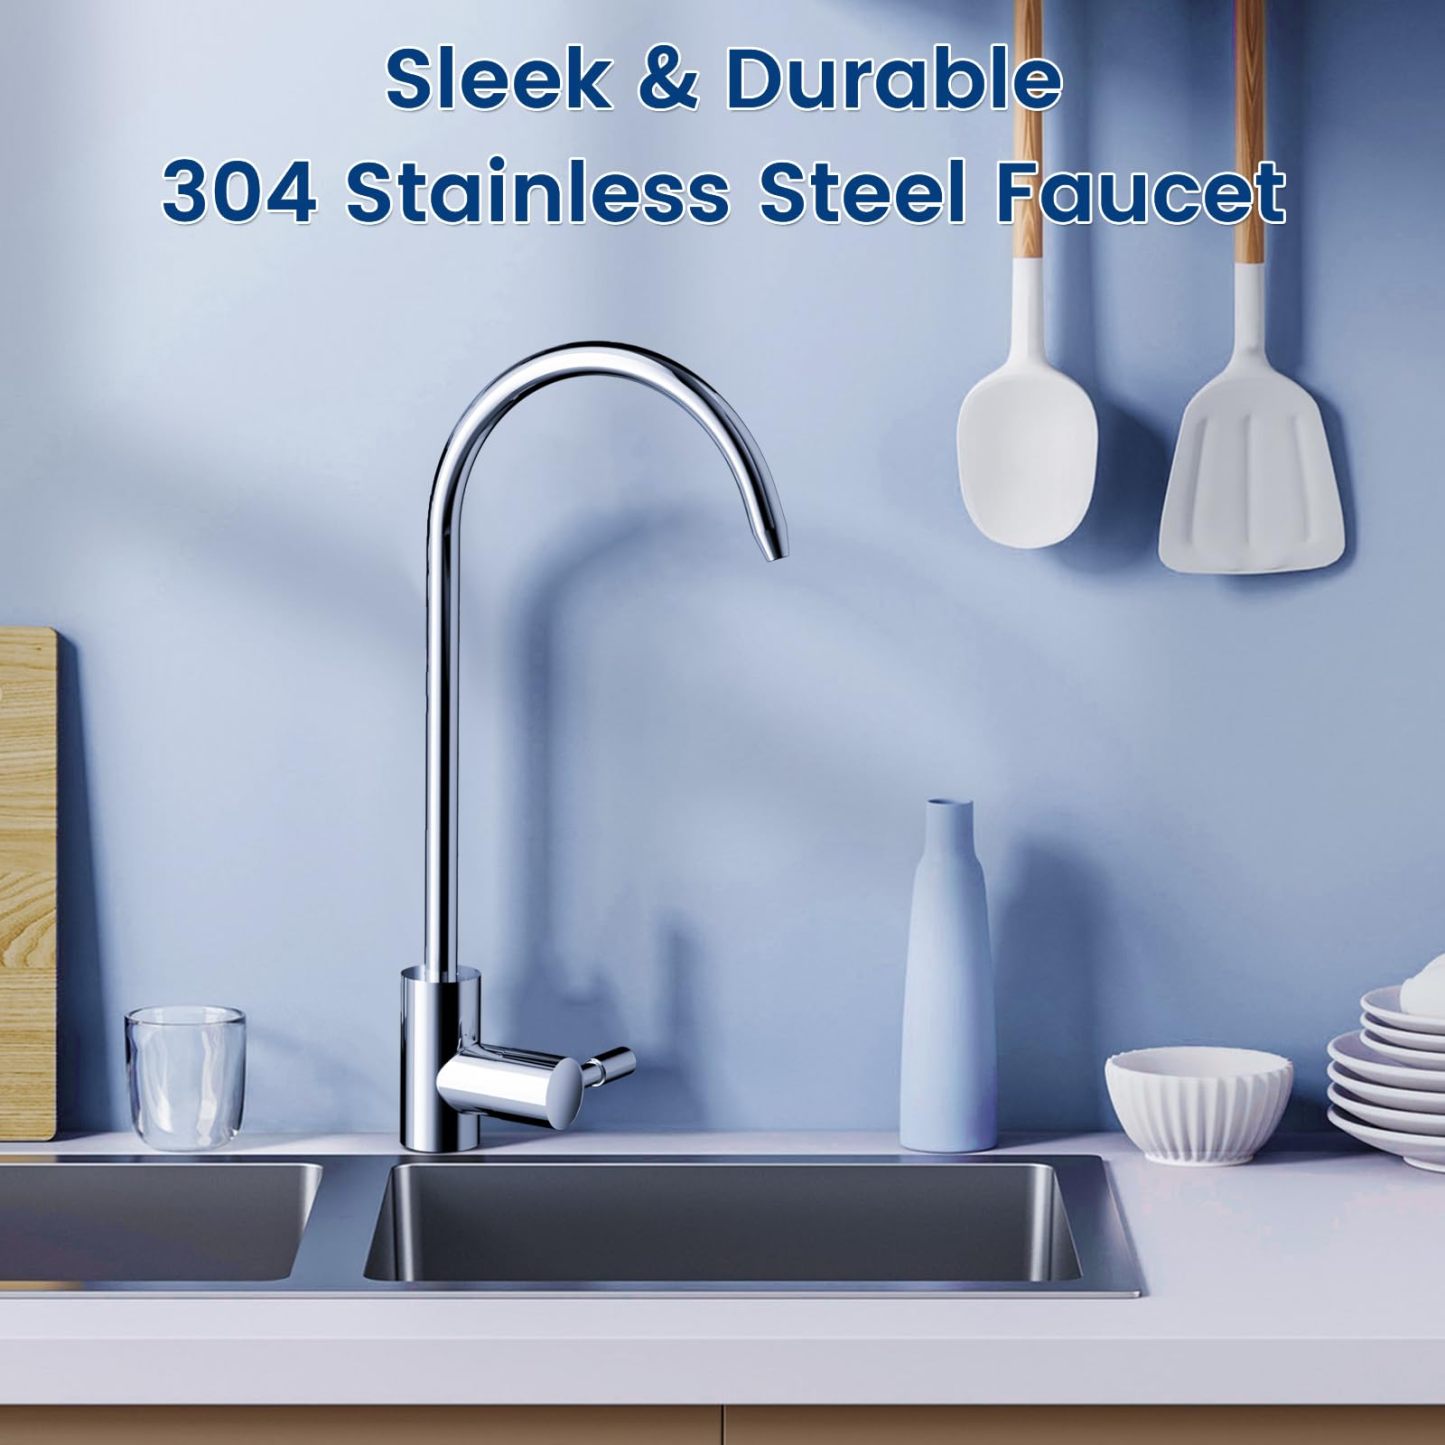 Q6-C2-Vortopt Under Sink Water Filter System - Water Filter Under Sink with 304 Stainless Steel Faucet, 